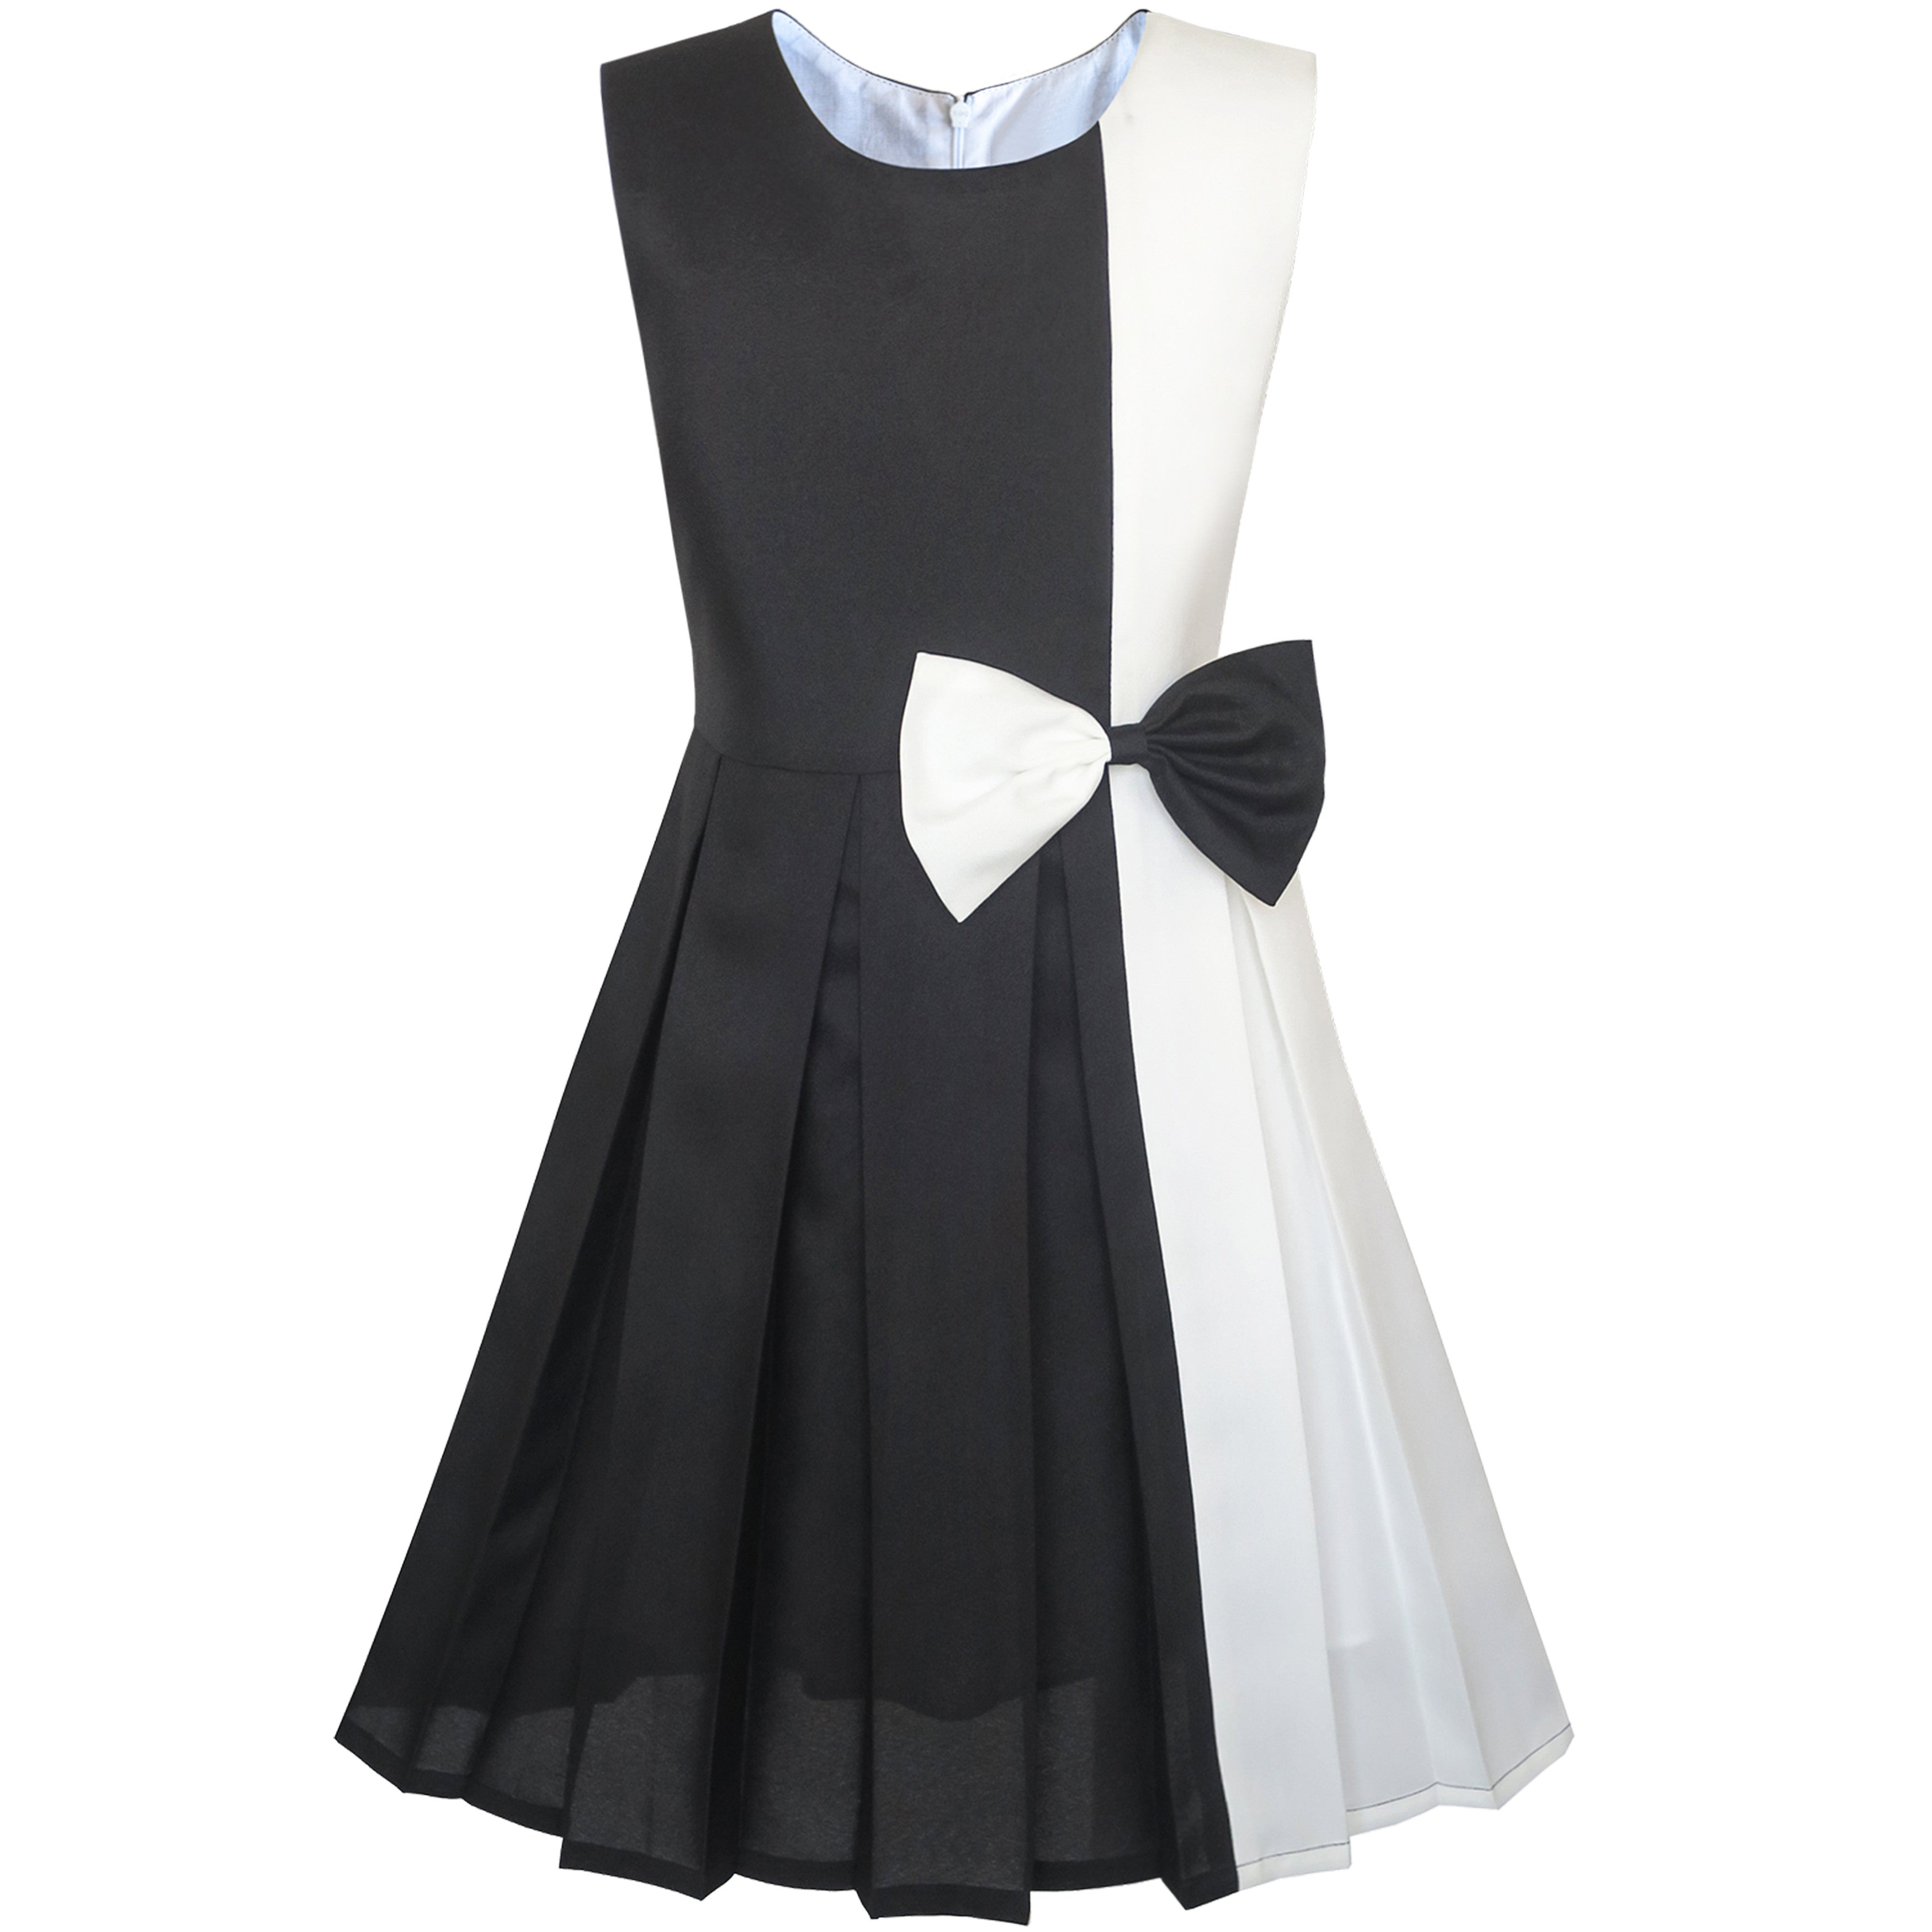 black and white block dress